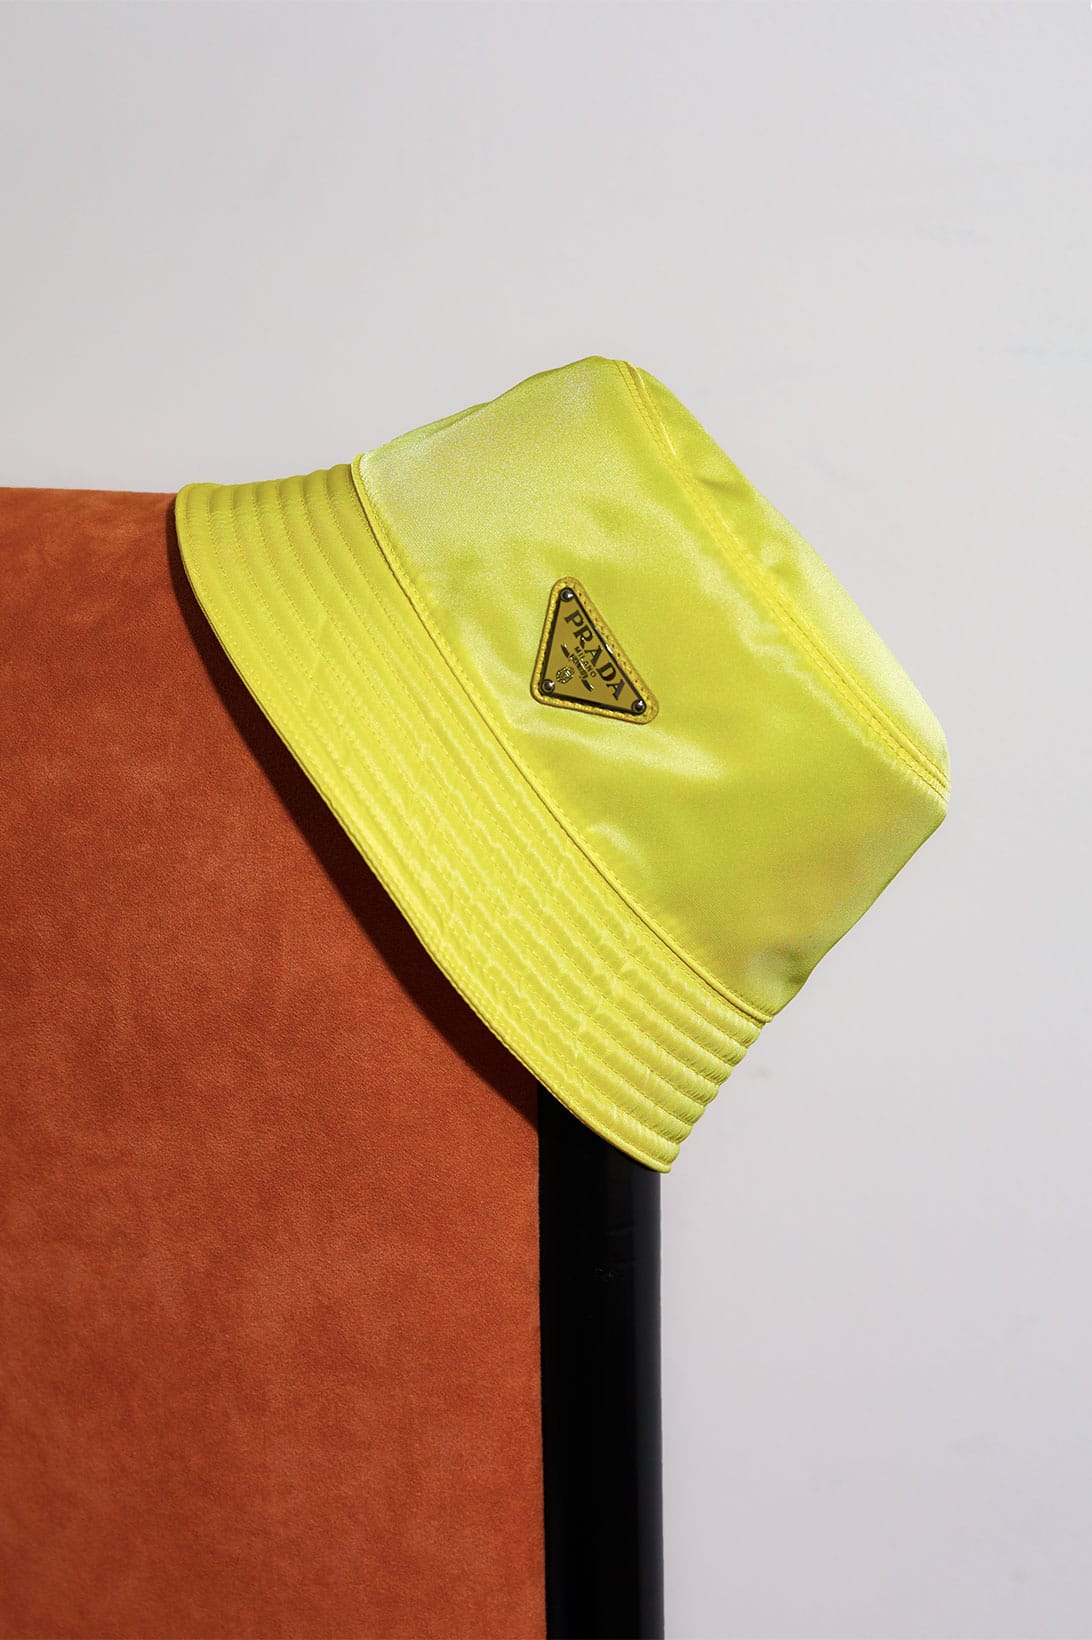 yellow prada bucket hat